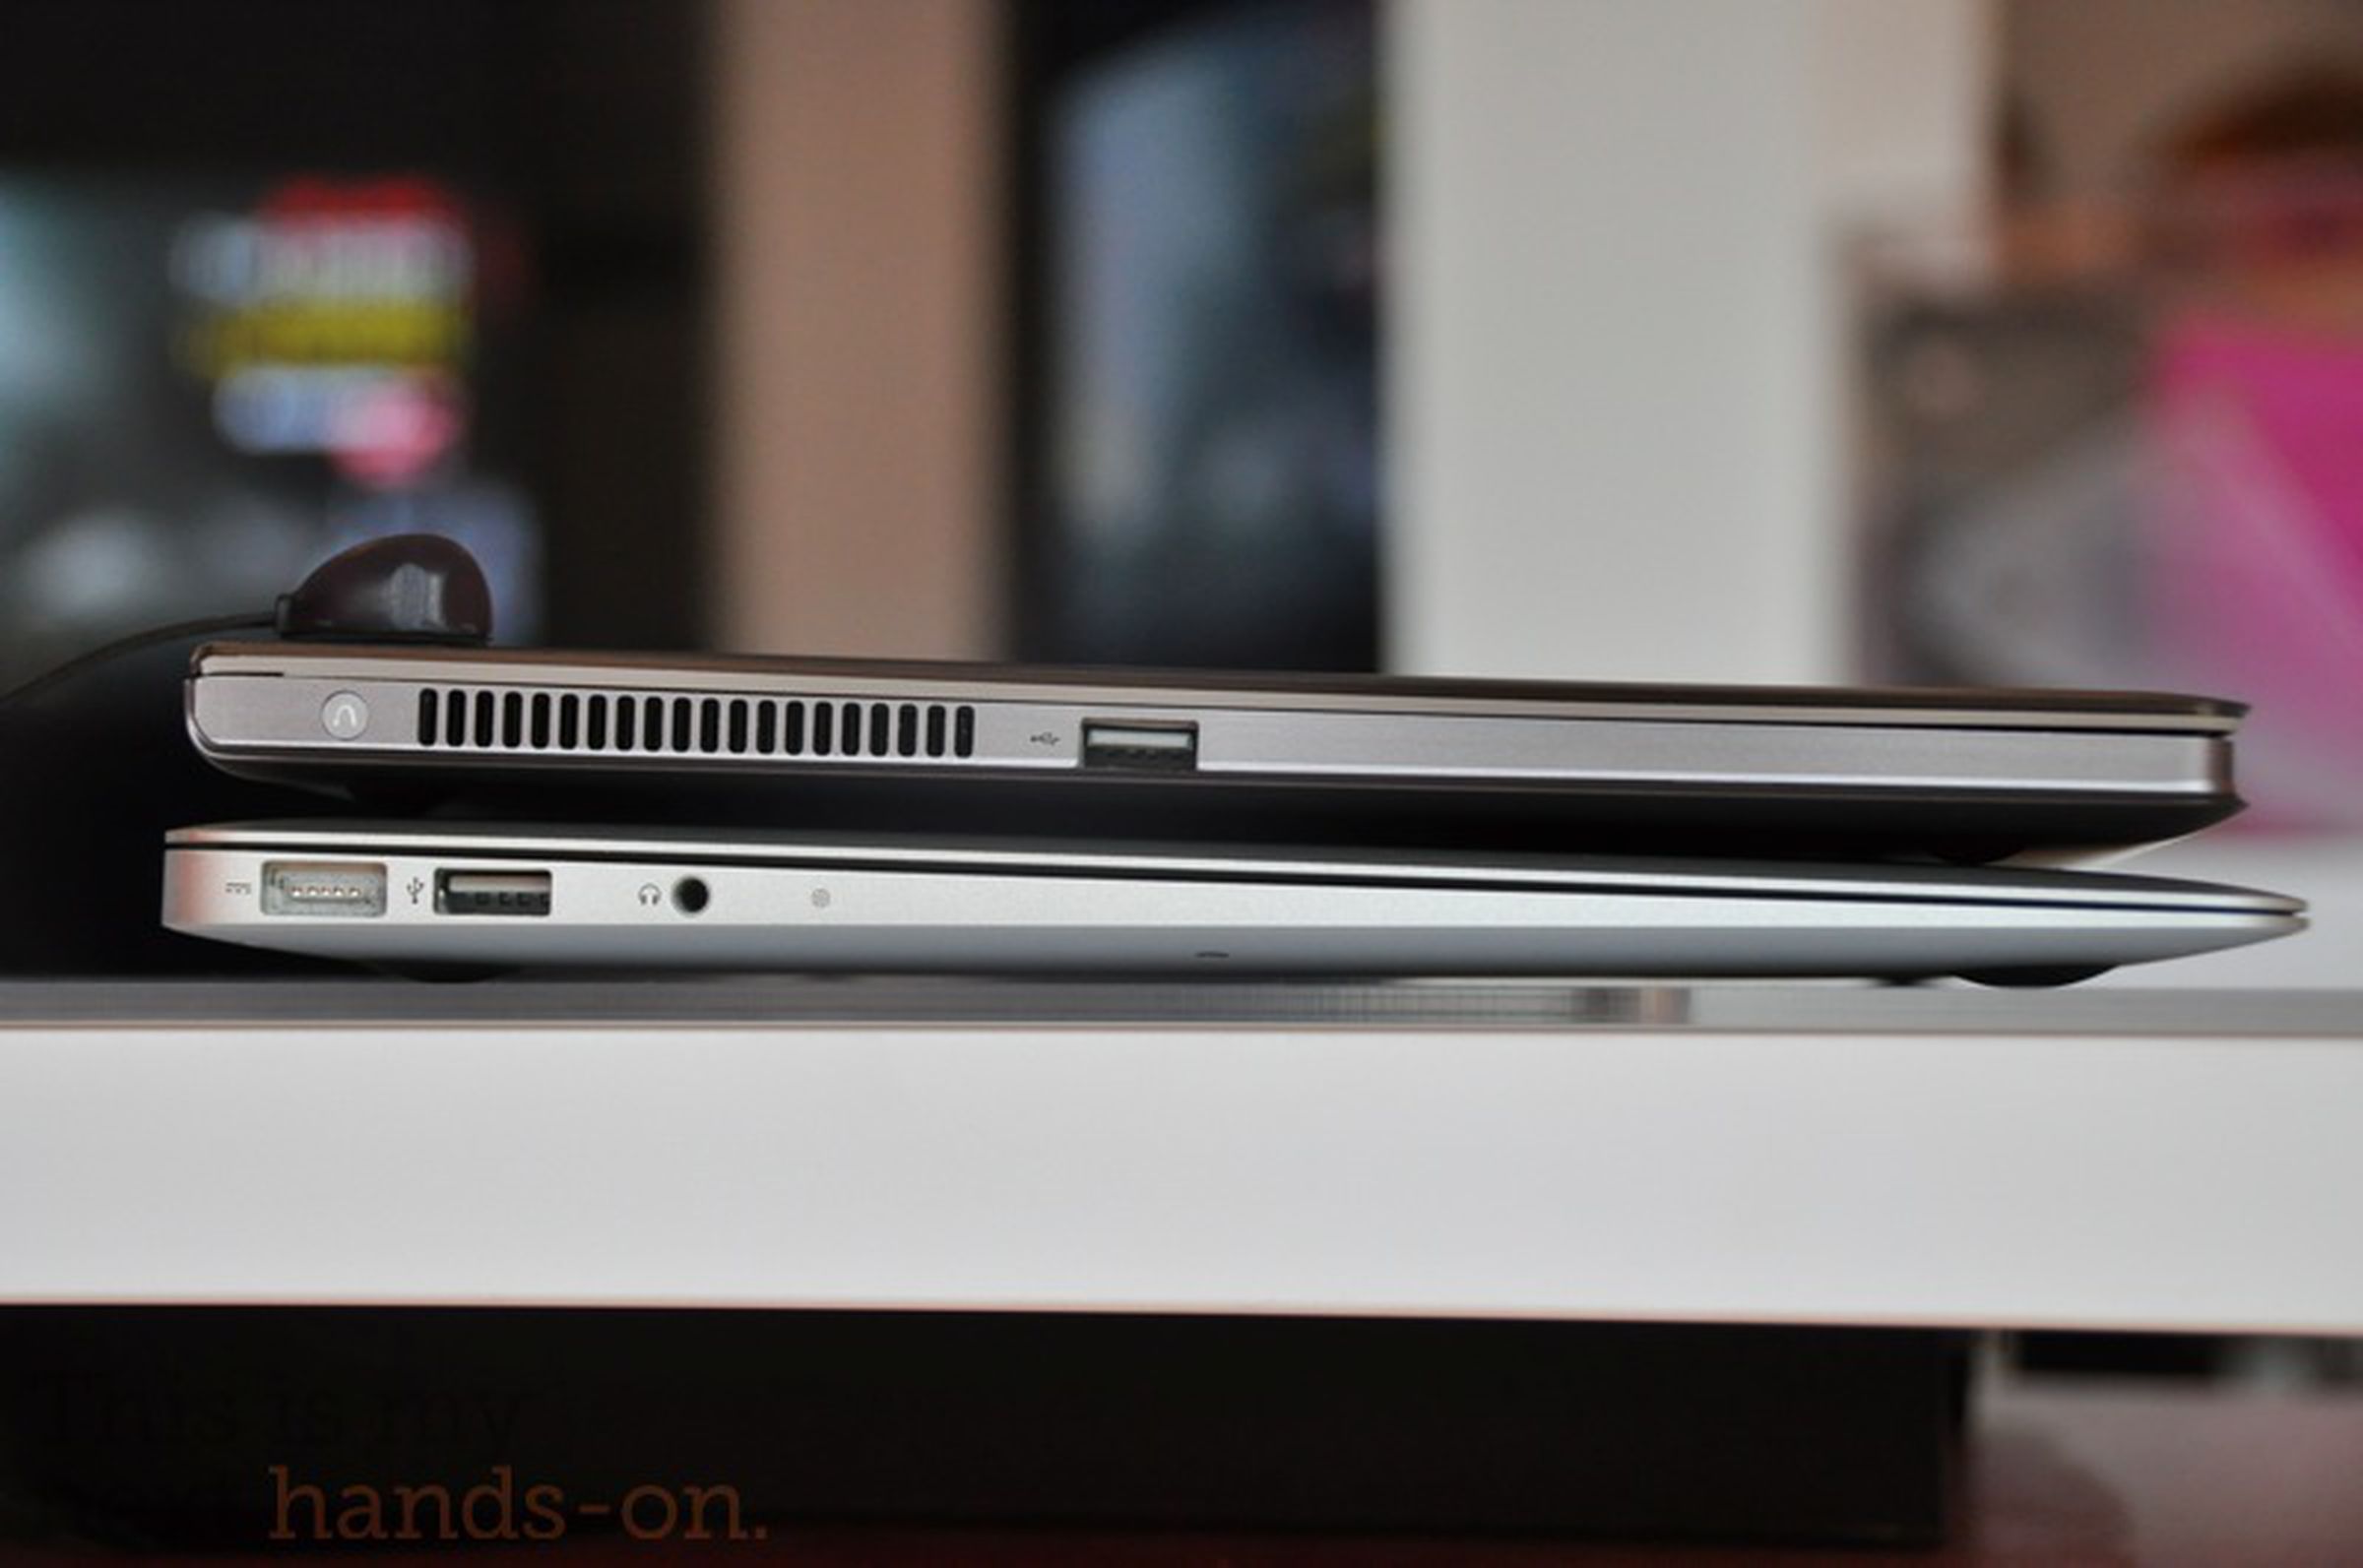 MacBook Air vs. Lenovo IdeaPad U300s photos